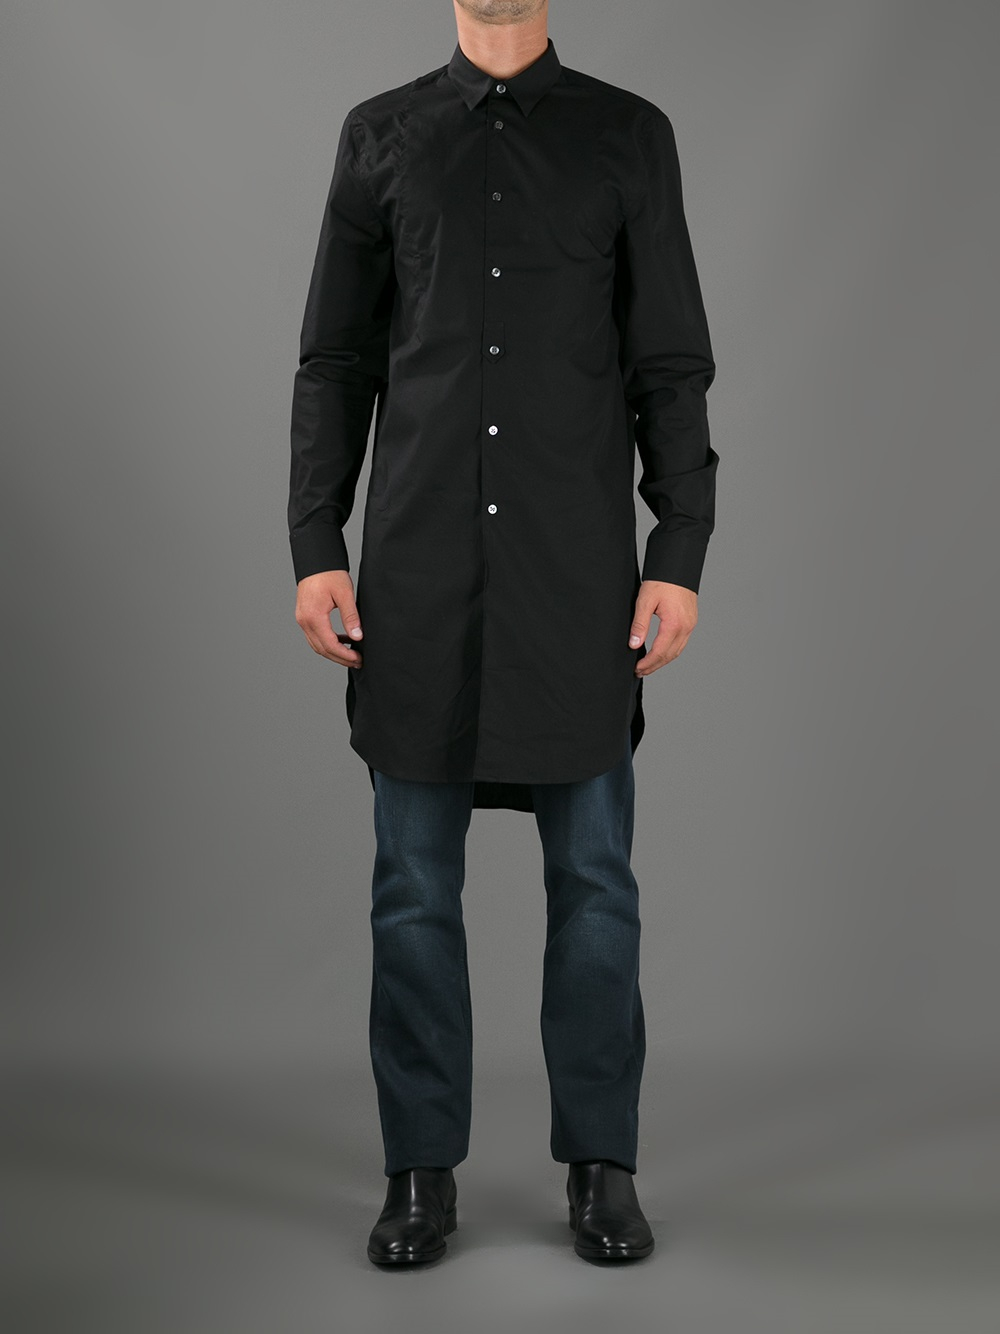 Acne Studios Jay Extra Long Shirt in Black for Men | Lyst